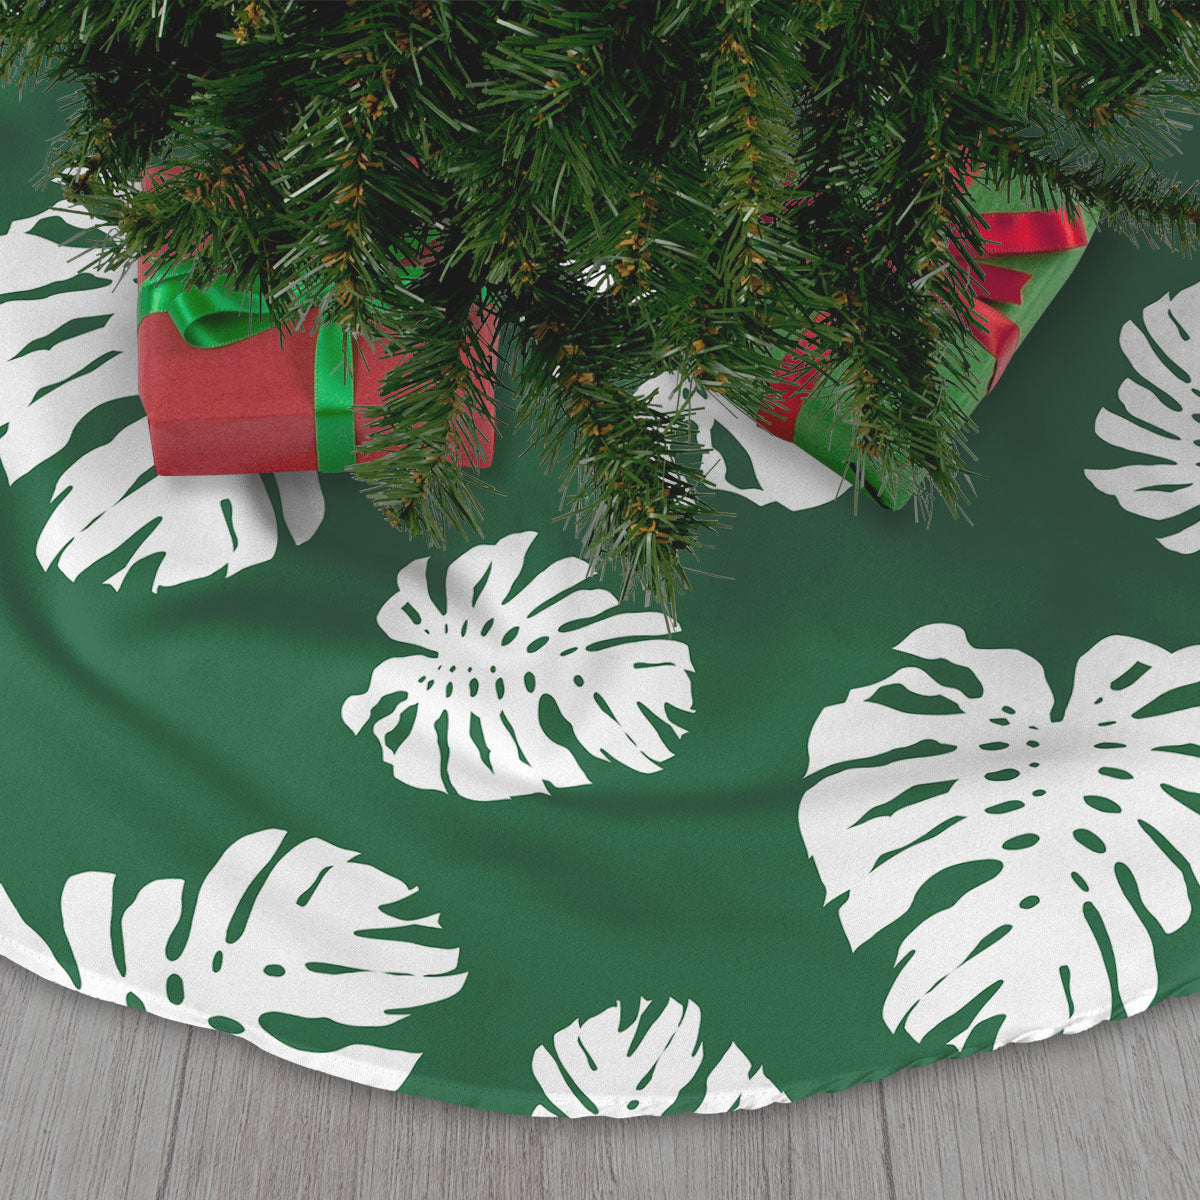 Green Lemai Leaves Guam CNMI Christmas Tree Skirt